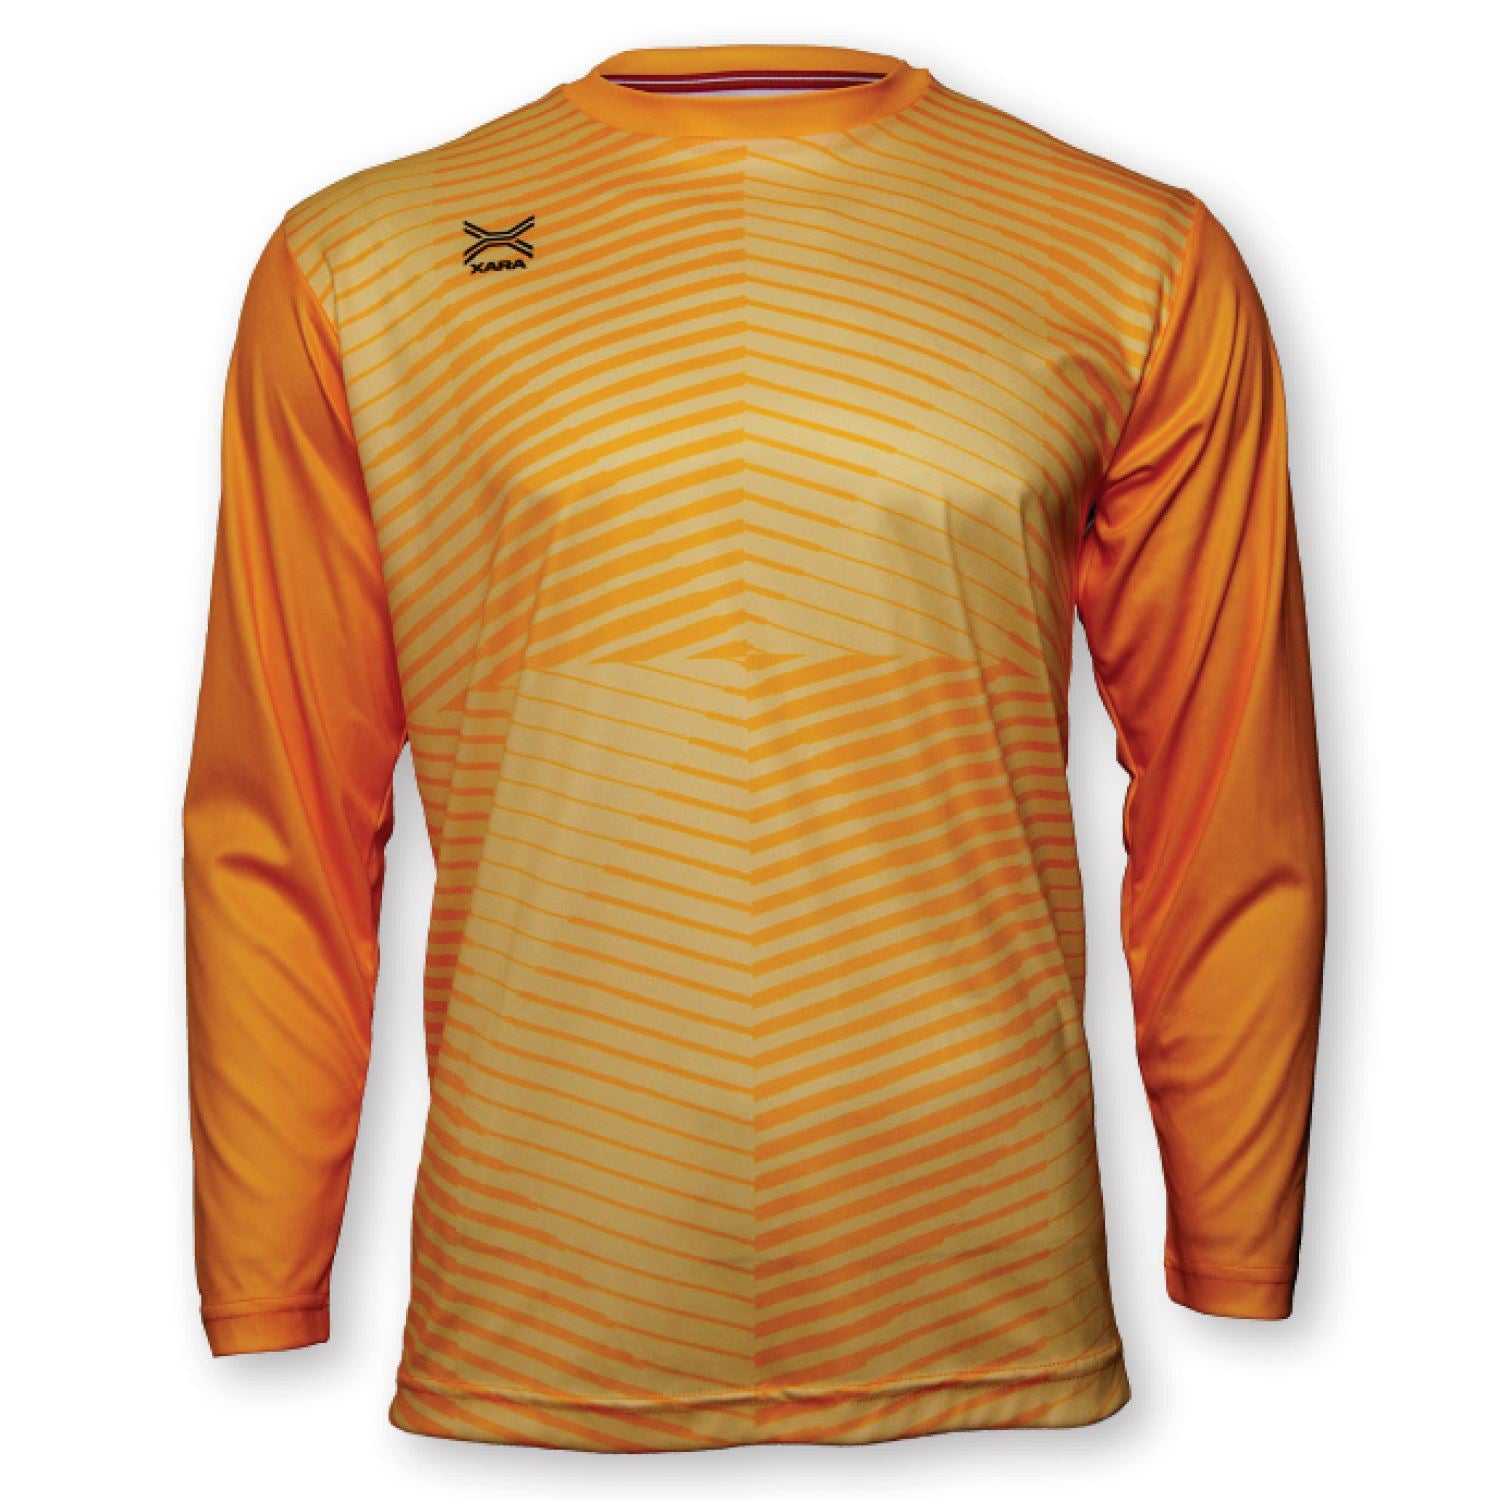 Shutout Goal Keeper Shirt - Unisex Shirt Xara Soccer Gold Youth Small 